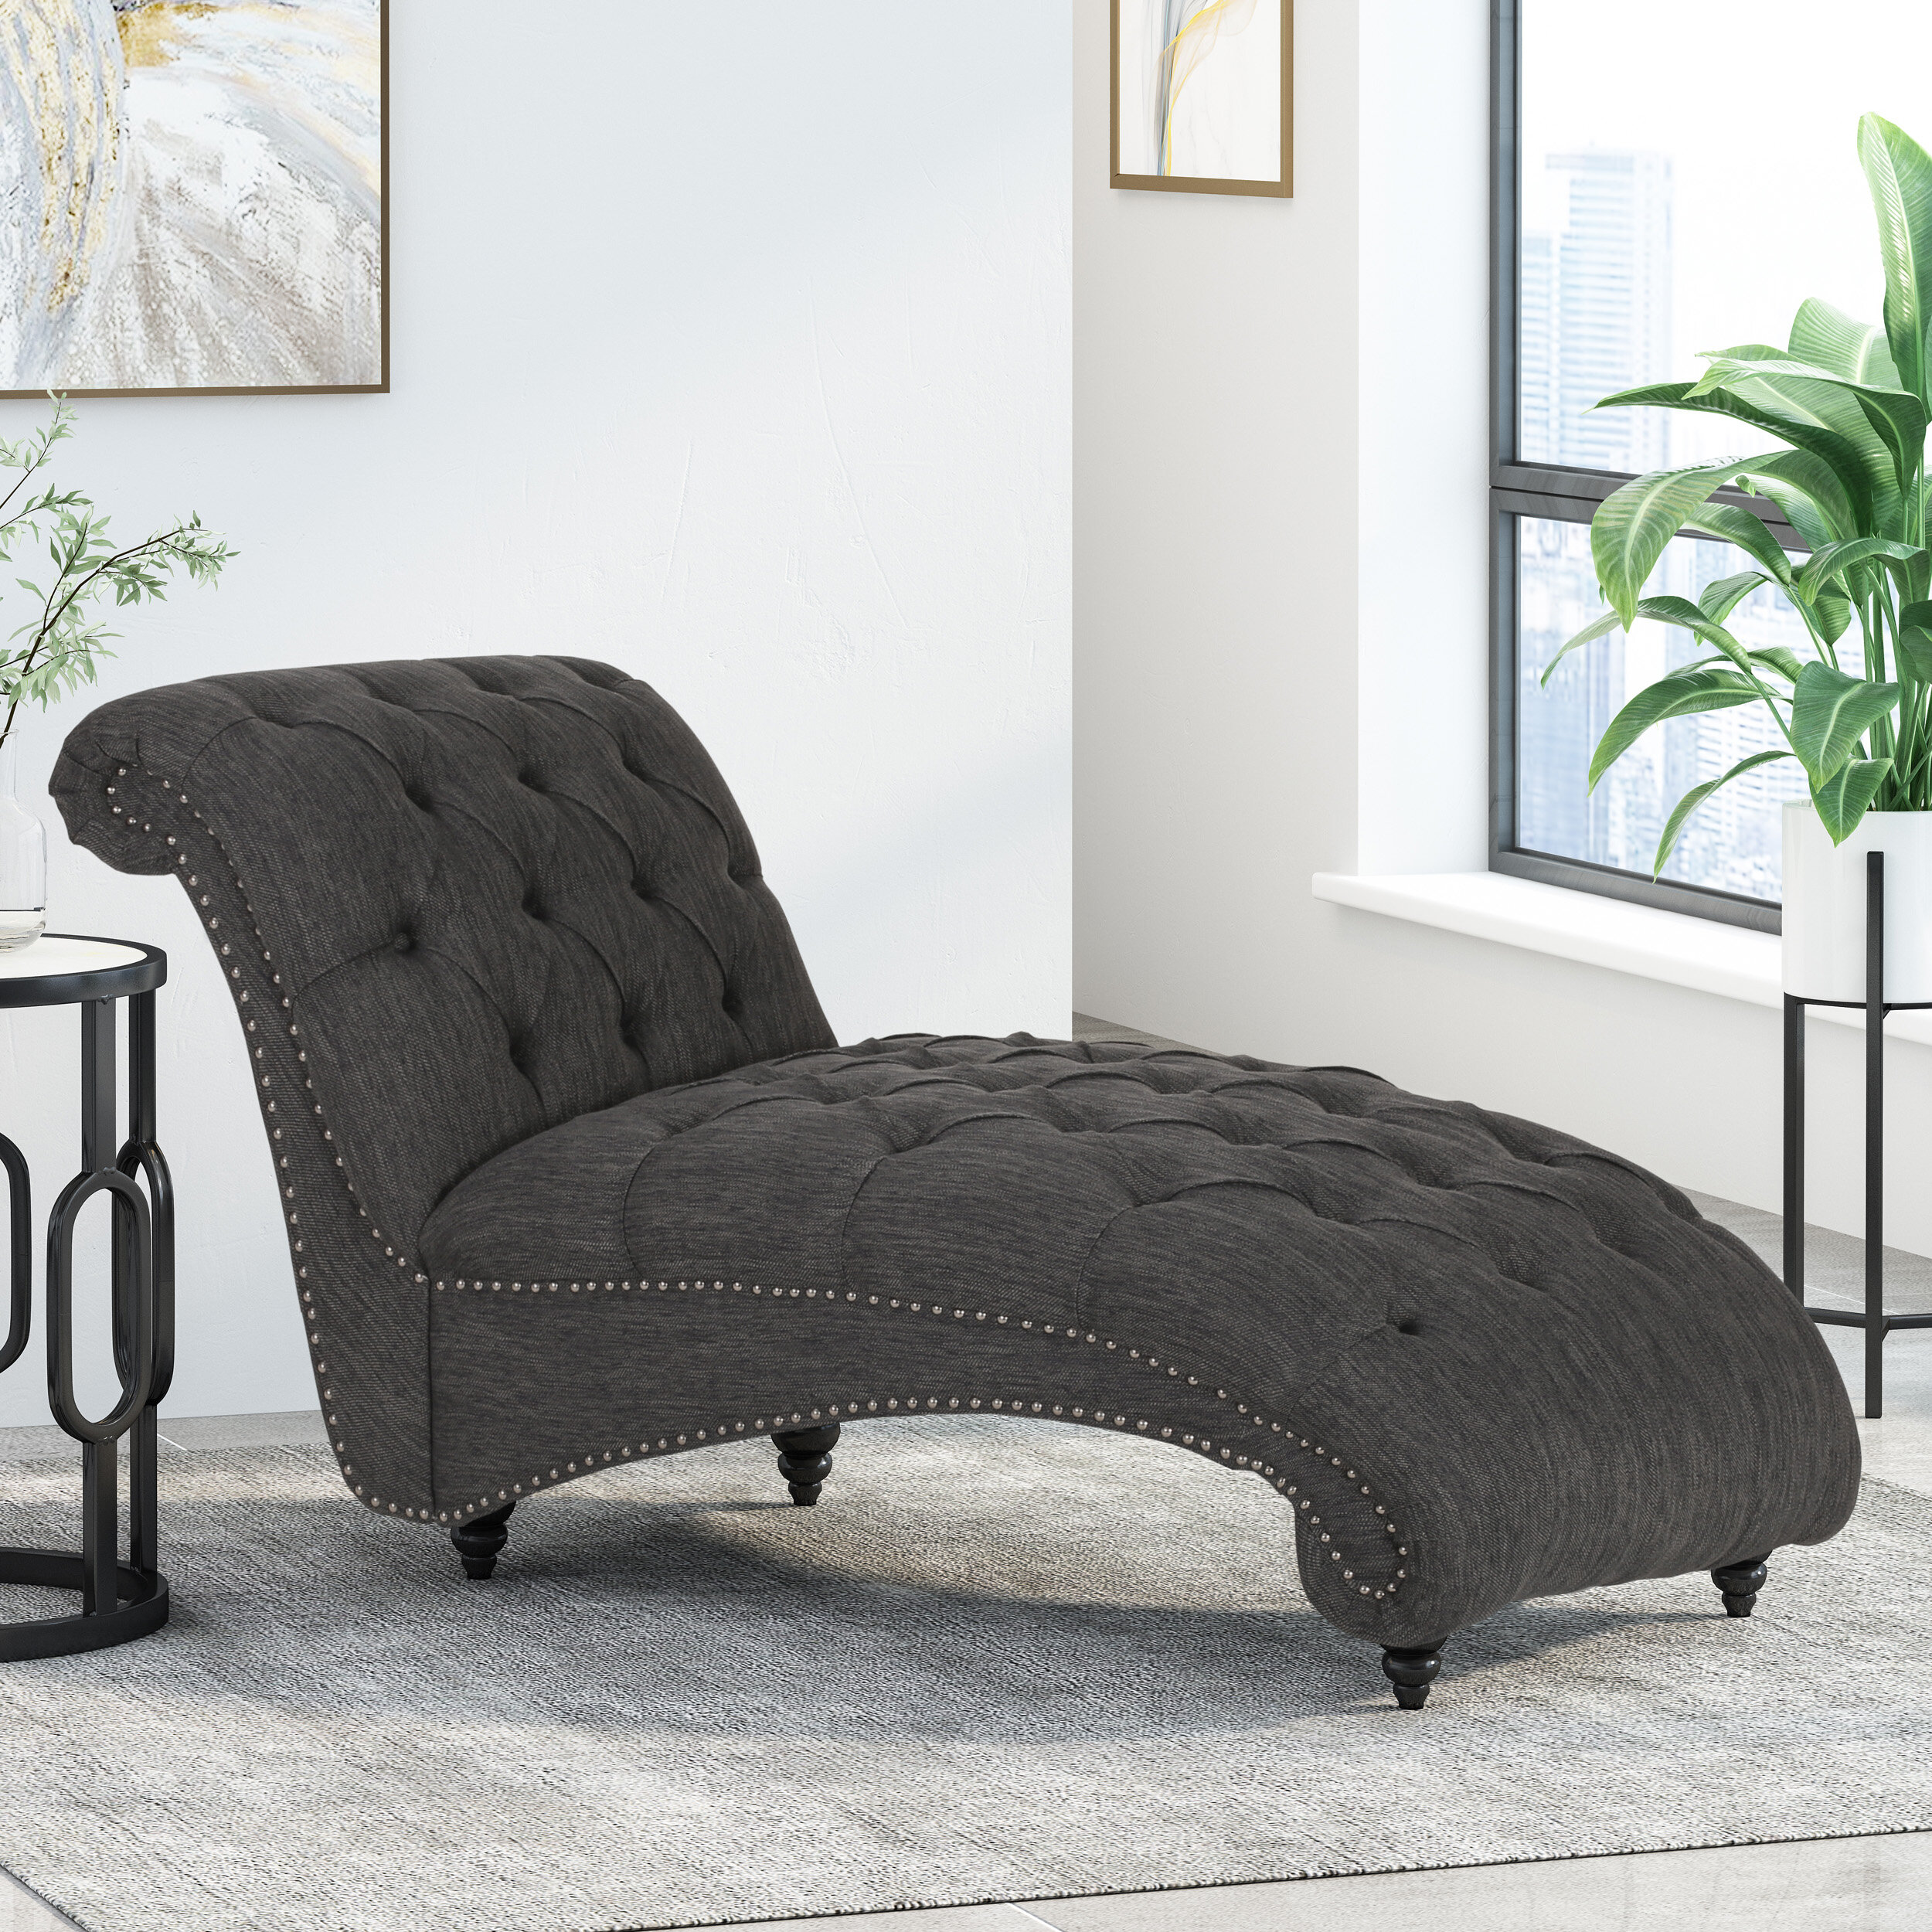 Benzinger Upholstered Chaise Lounge